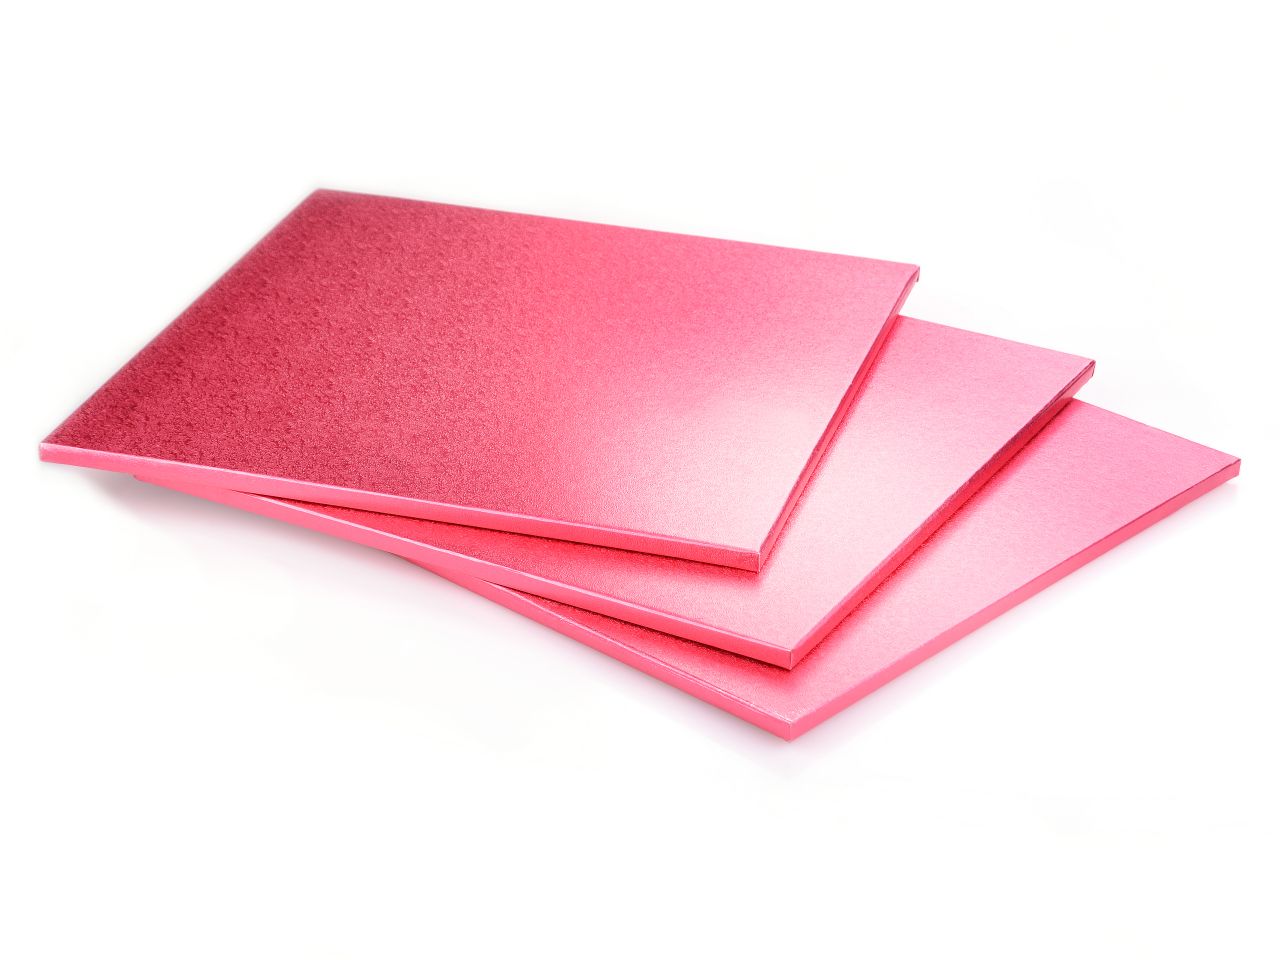 Cakeboard: Quadrat in Pink, 35 x 1,2 cm